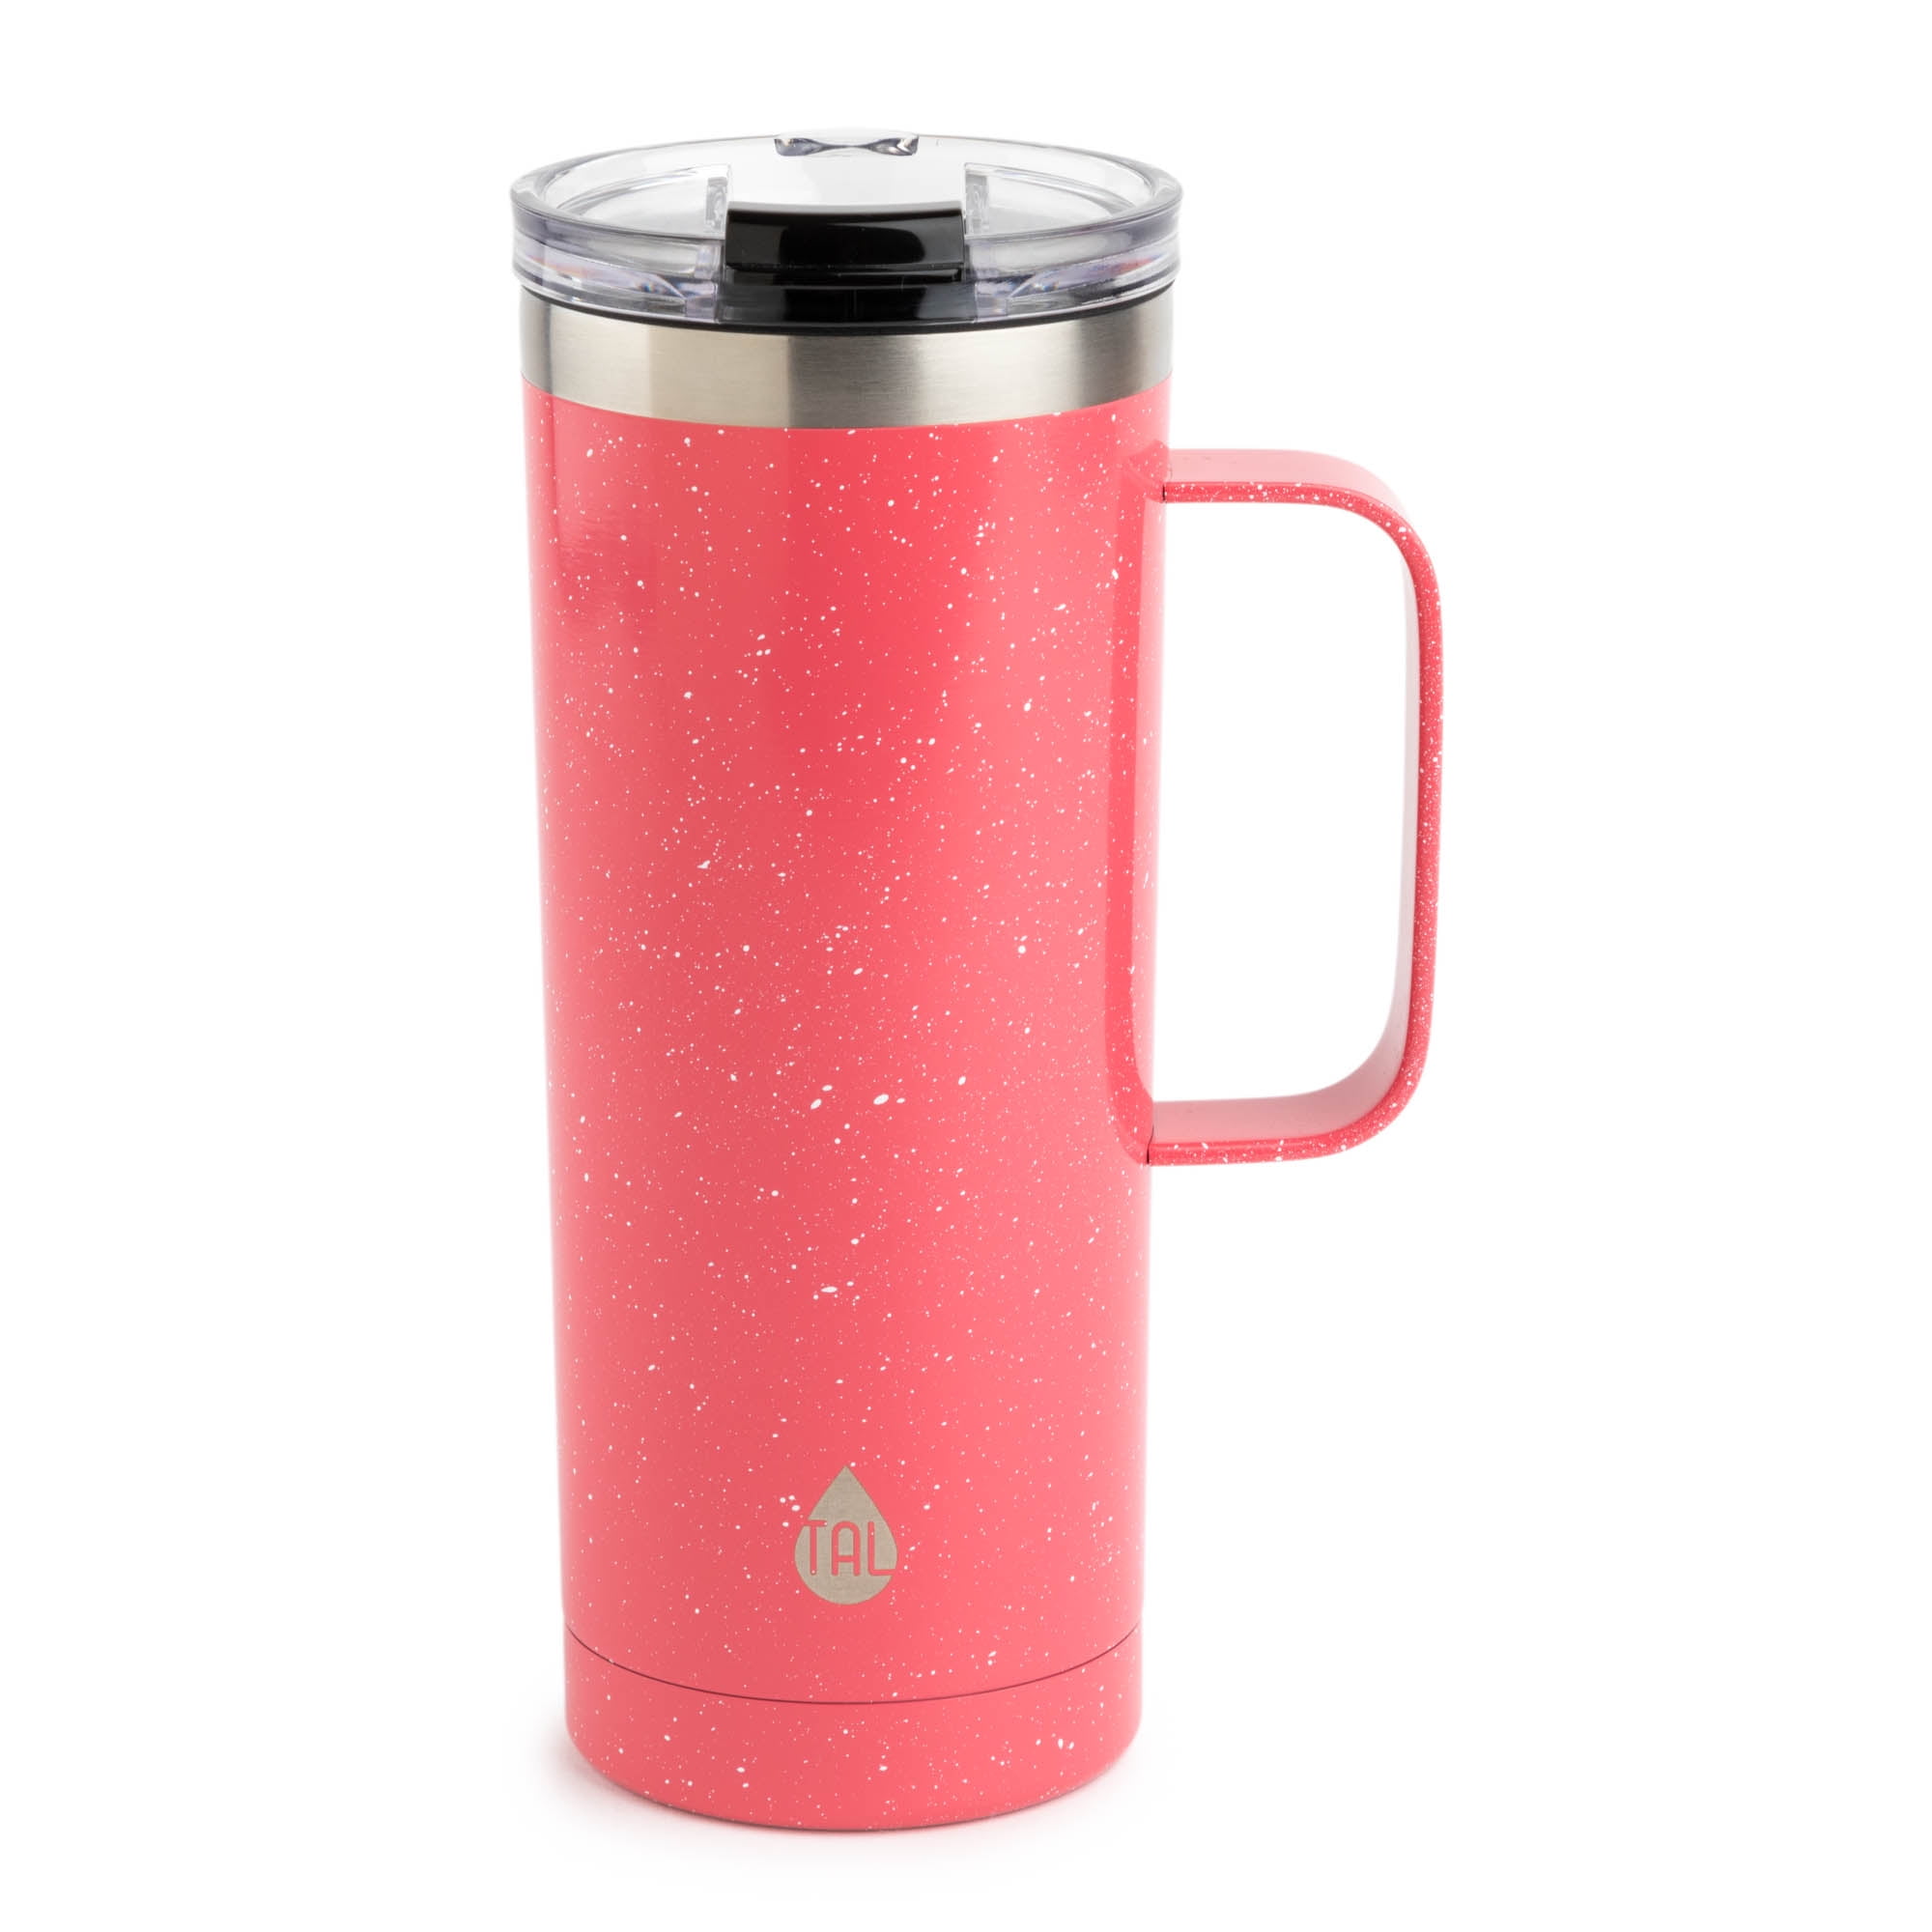 Metal Coffee and Tea Travel Mug Pretty In Pink Dangerous In Camo – Jazzy  Shopper®